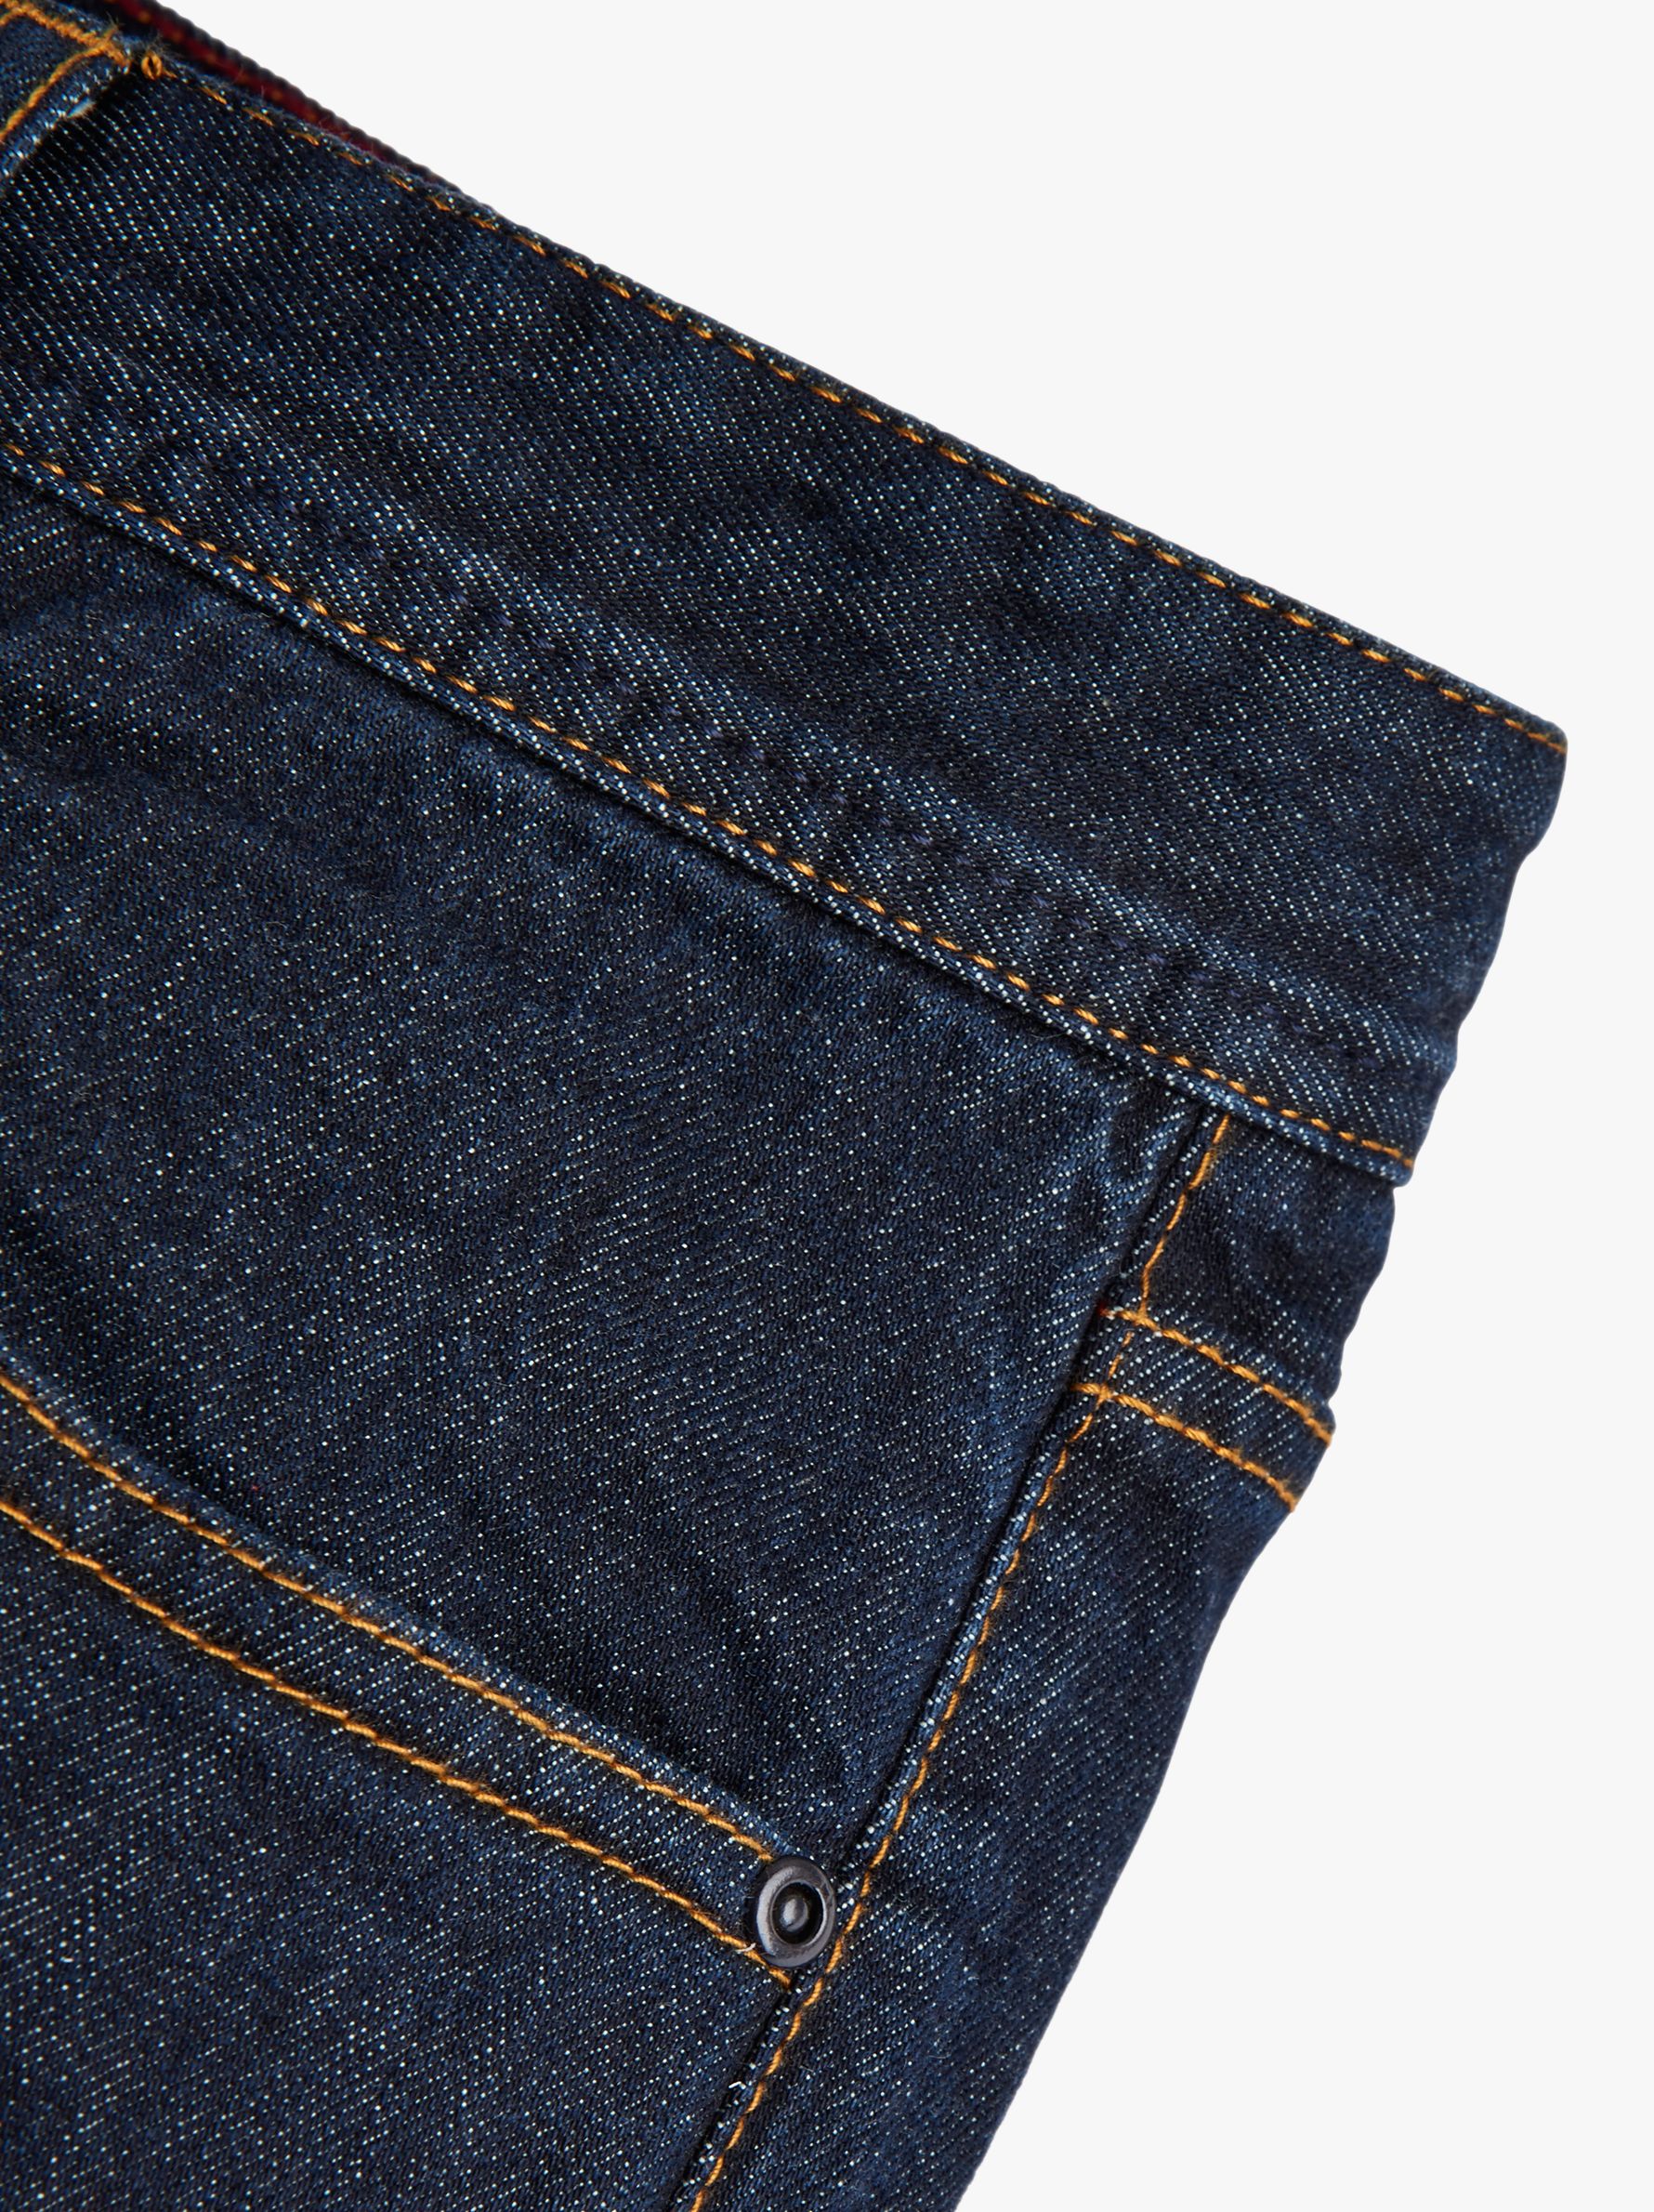 Joules 5 Pocket Slim Fit Jeans, Blue Denim